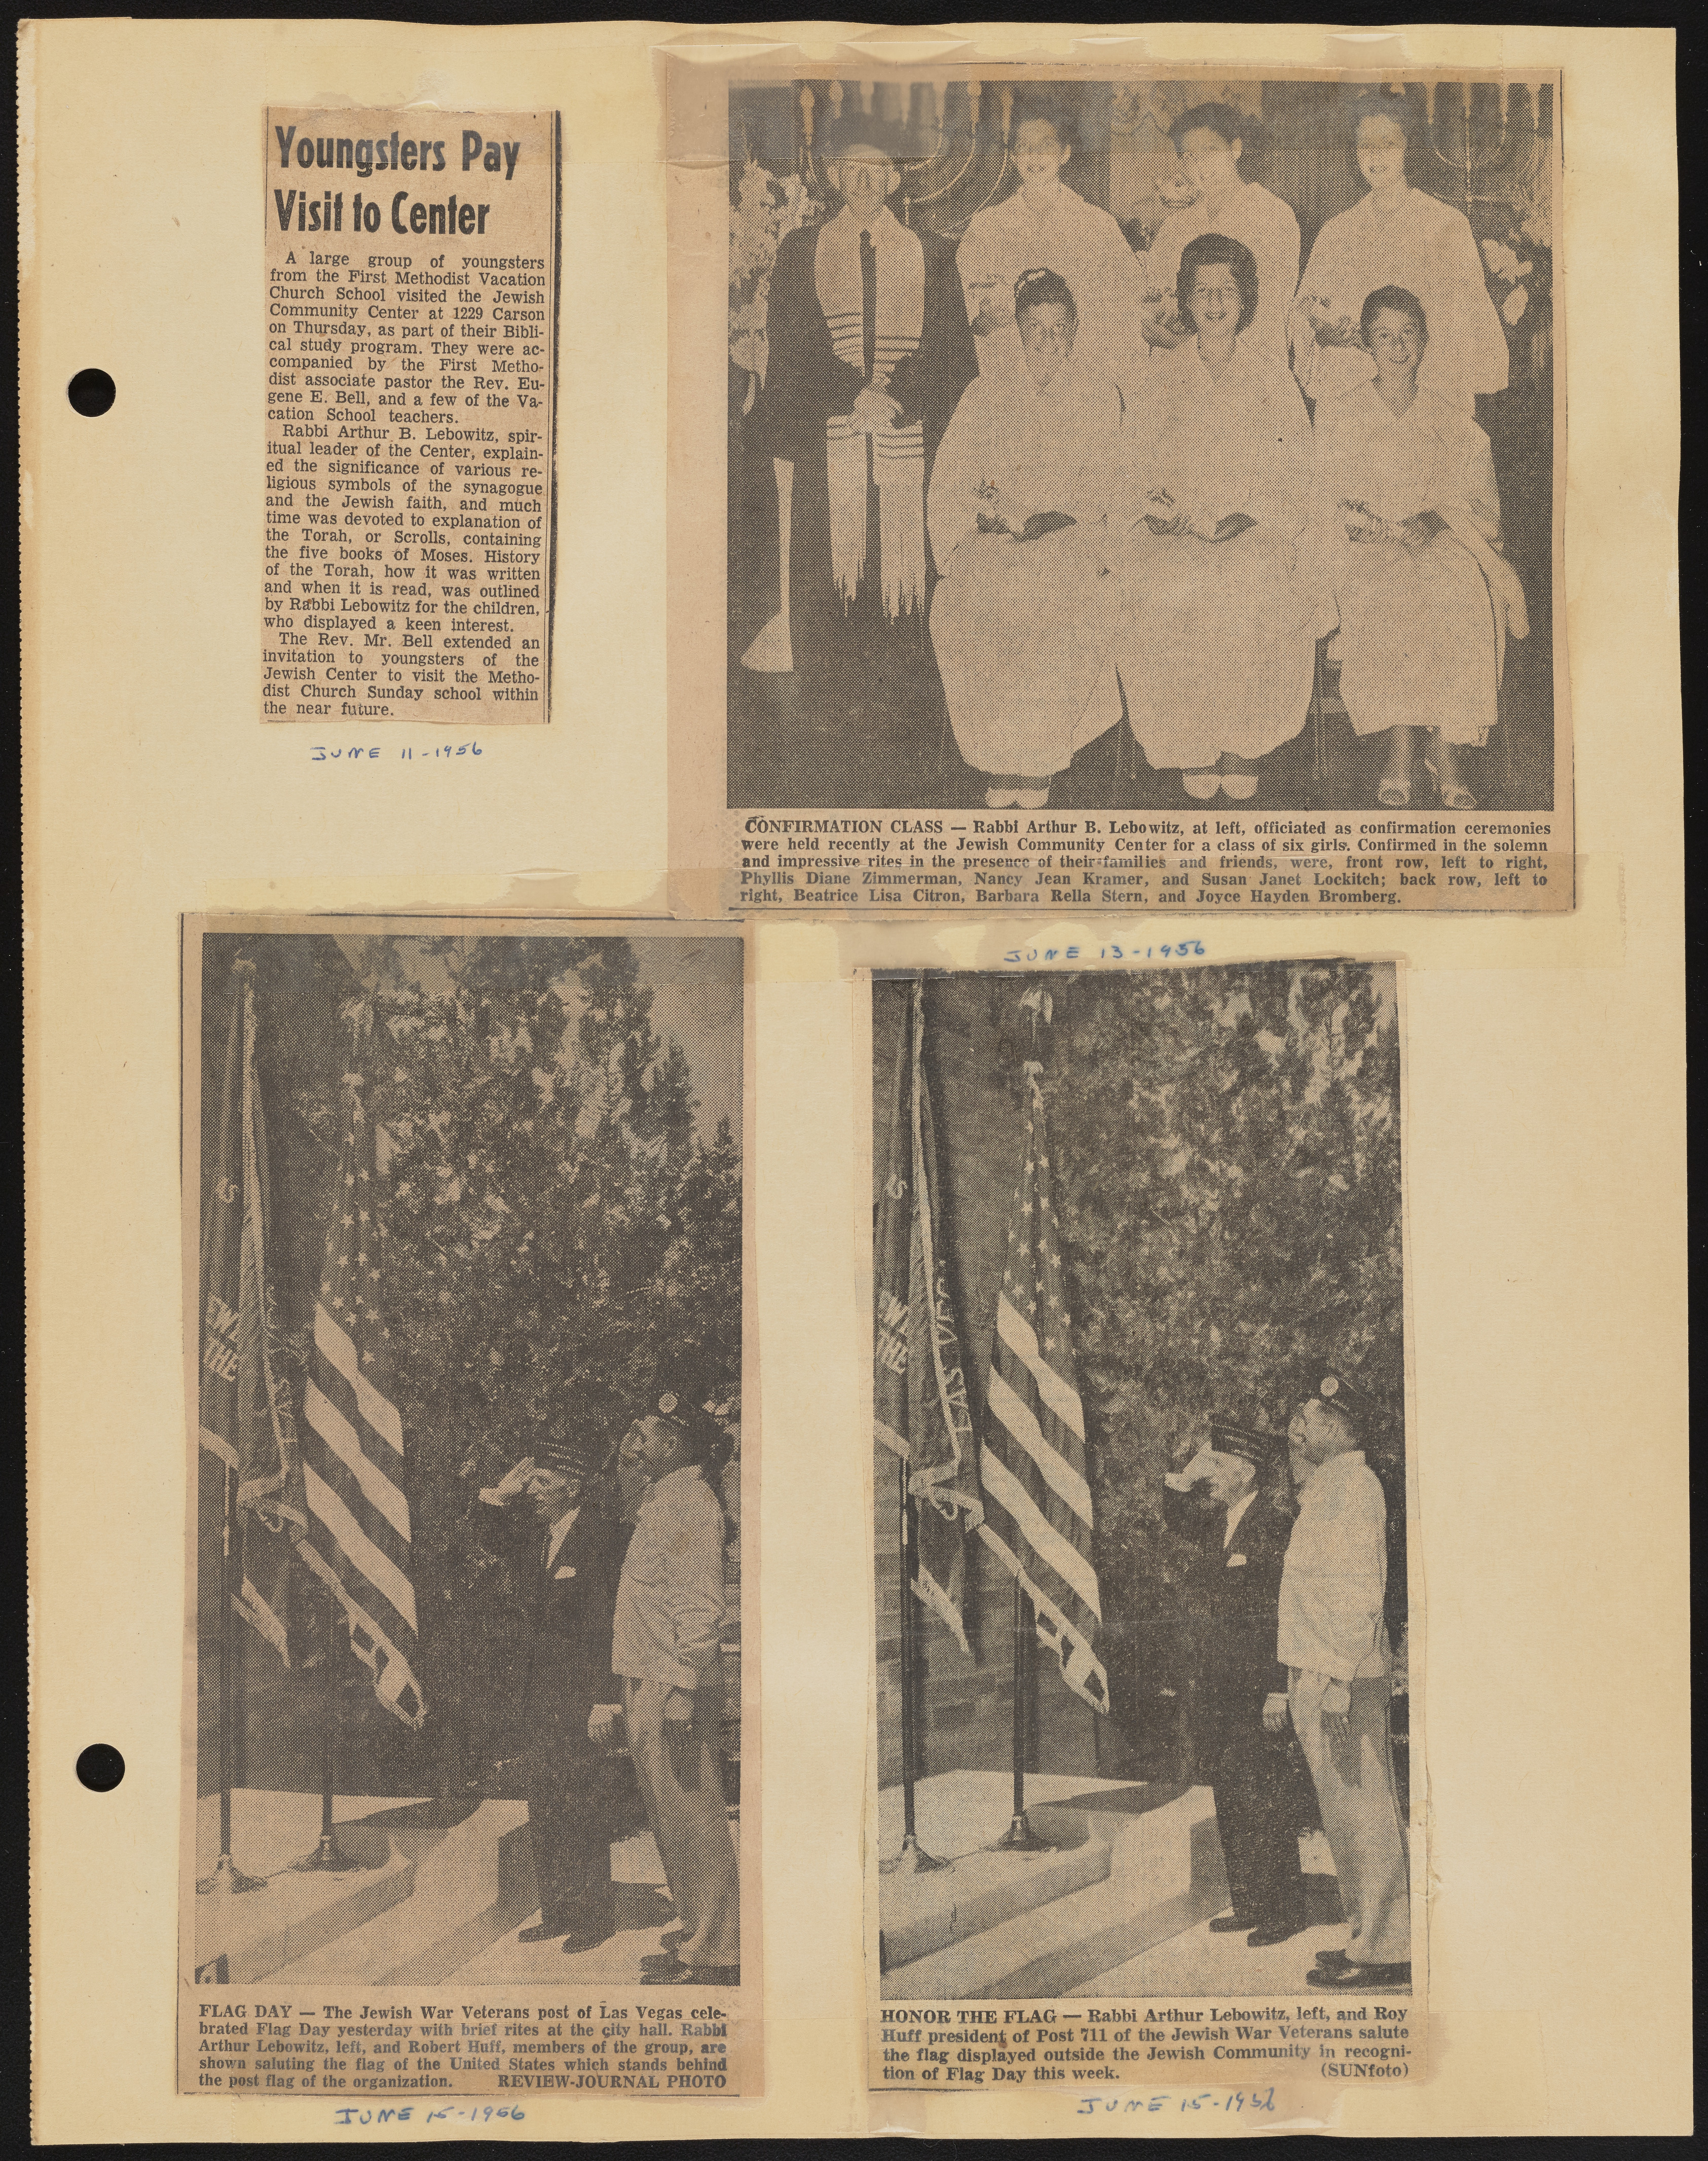 Temple Beth Sholom Sisterhood scrapbook, image 48